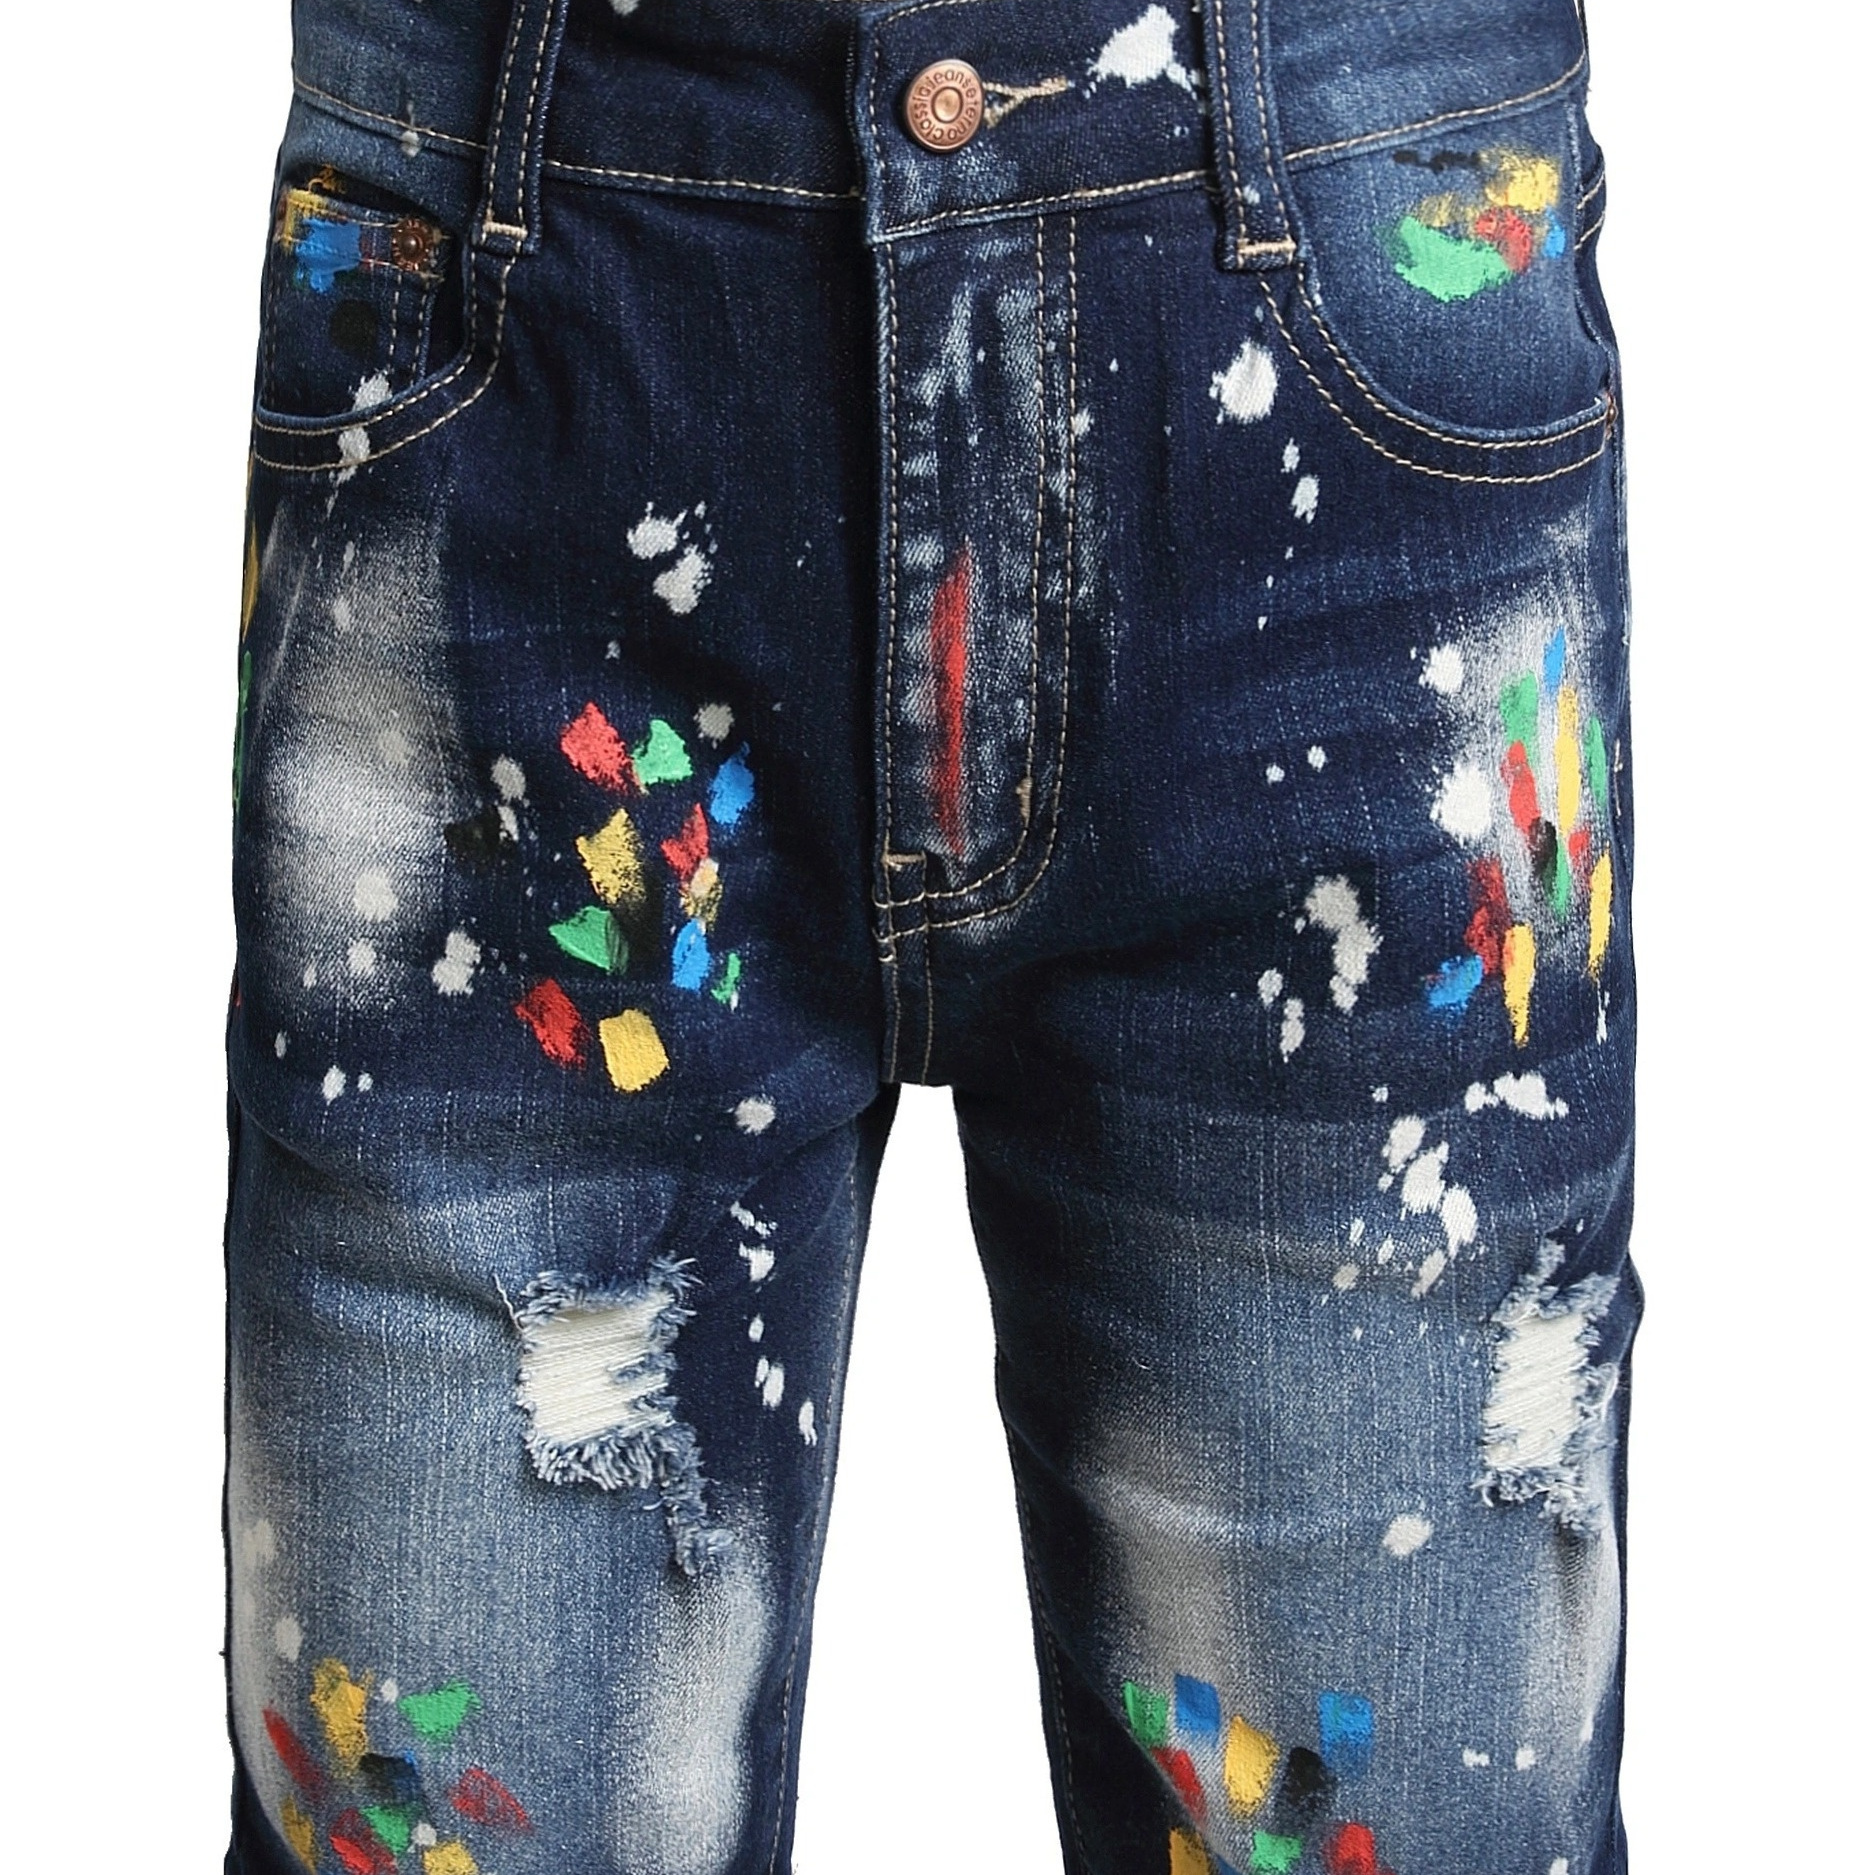 

Boys Trendy Denim Shorts, Party Style, Graffiti Print, Stretch Fit, Paint Splash, Distressed Knee-length Jeans For Boys